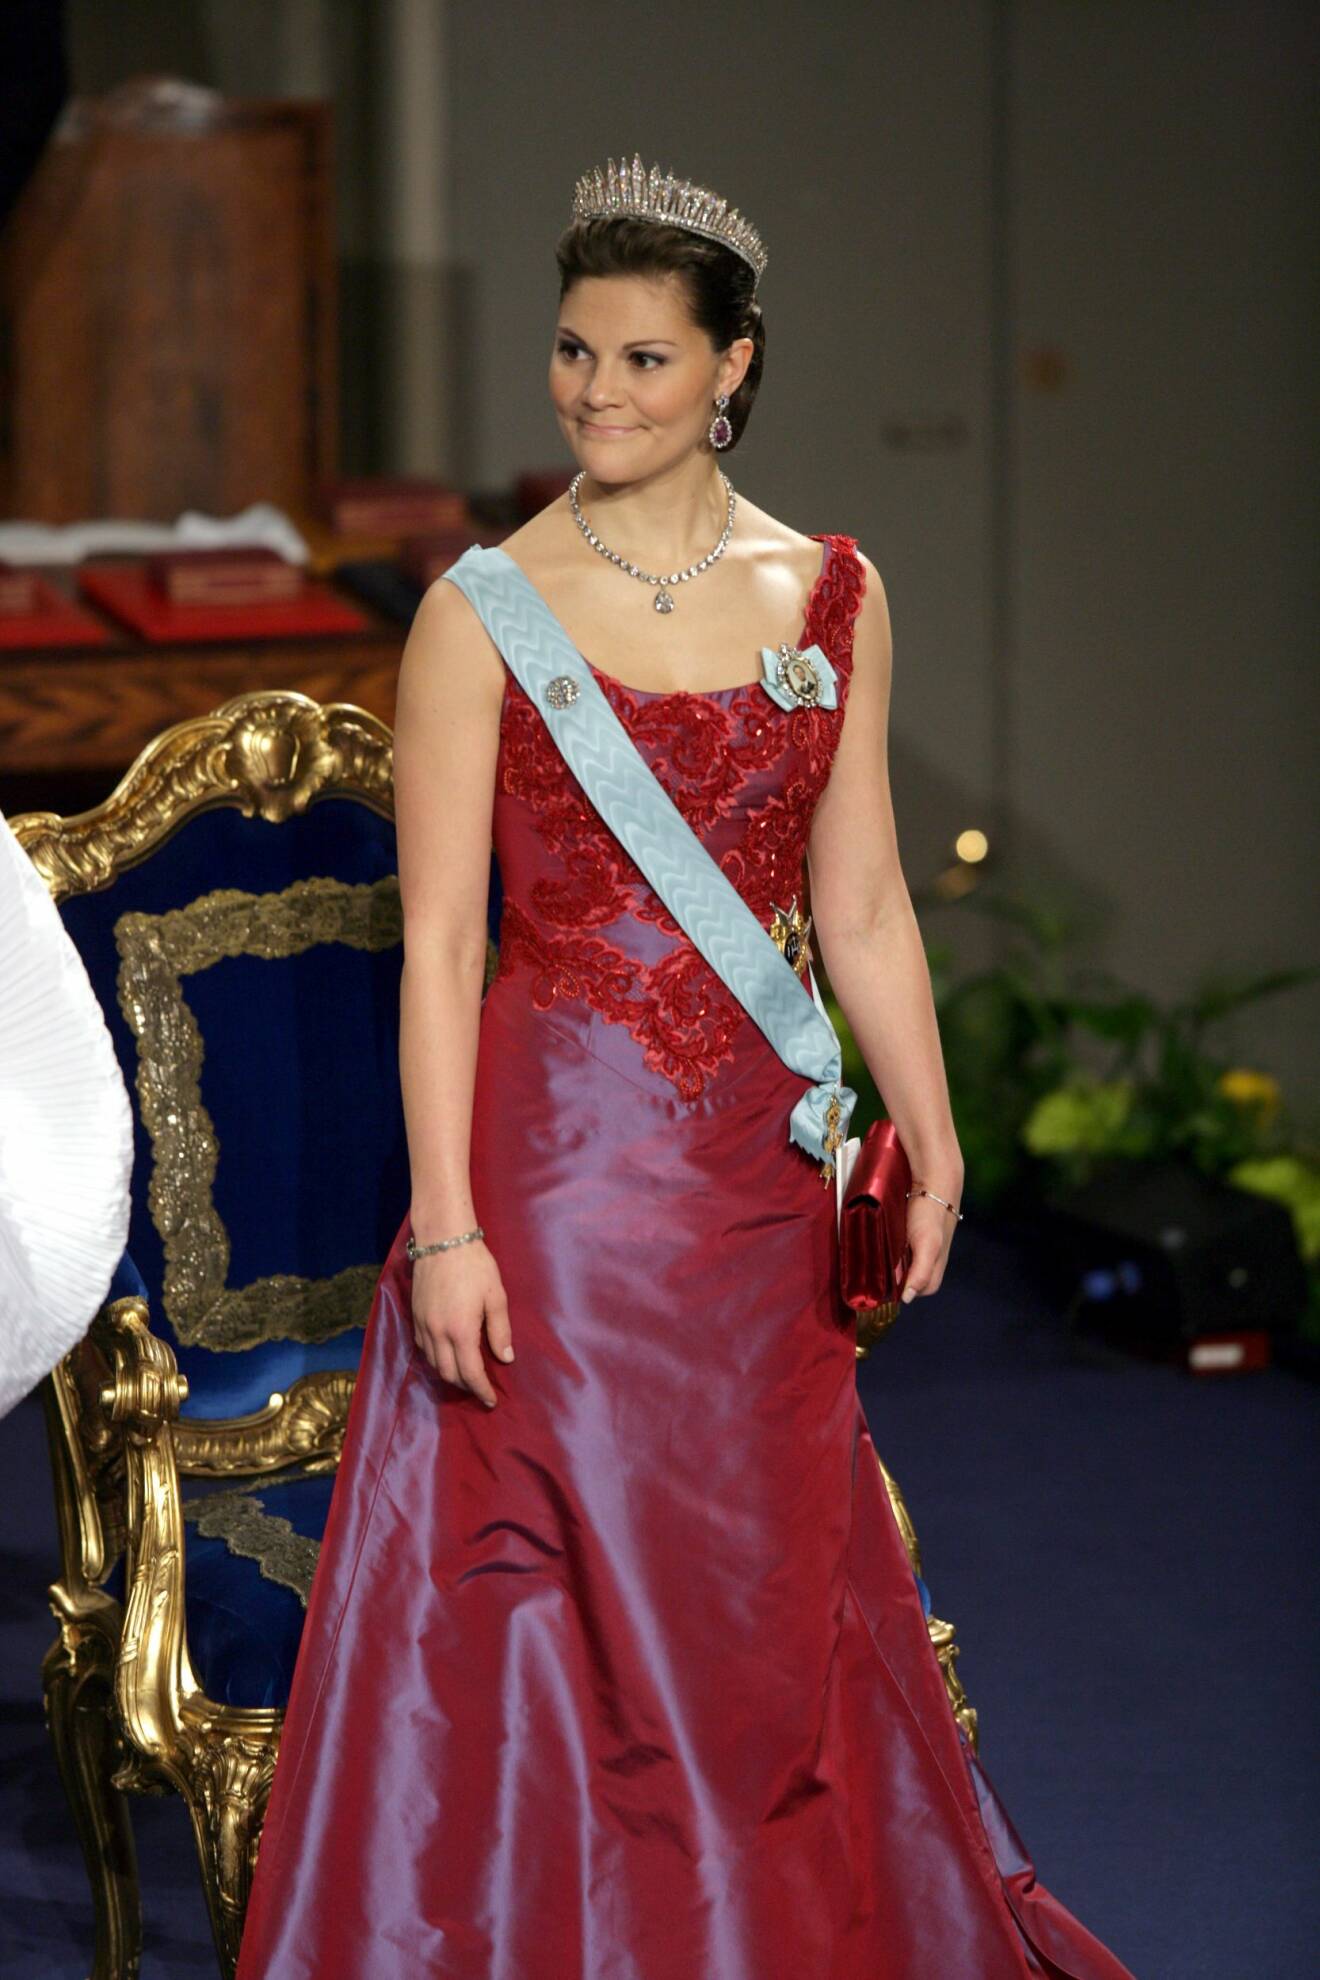 Kronprinsessan Victoria på Nobel 2006